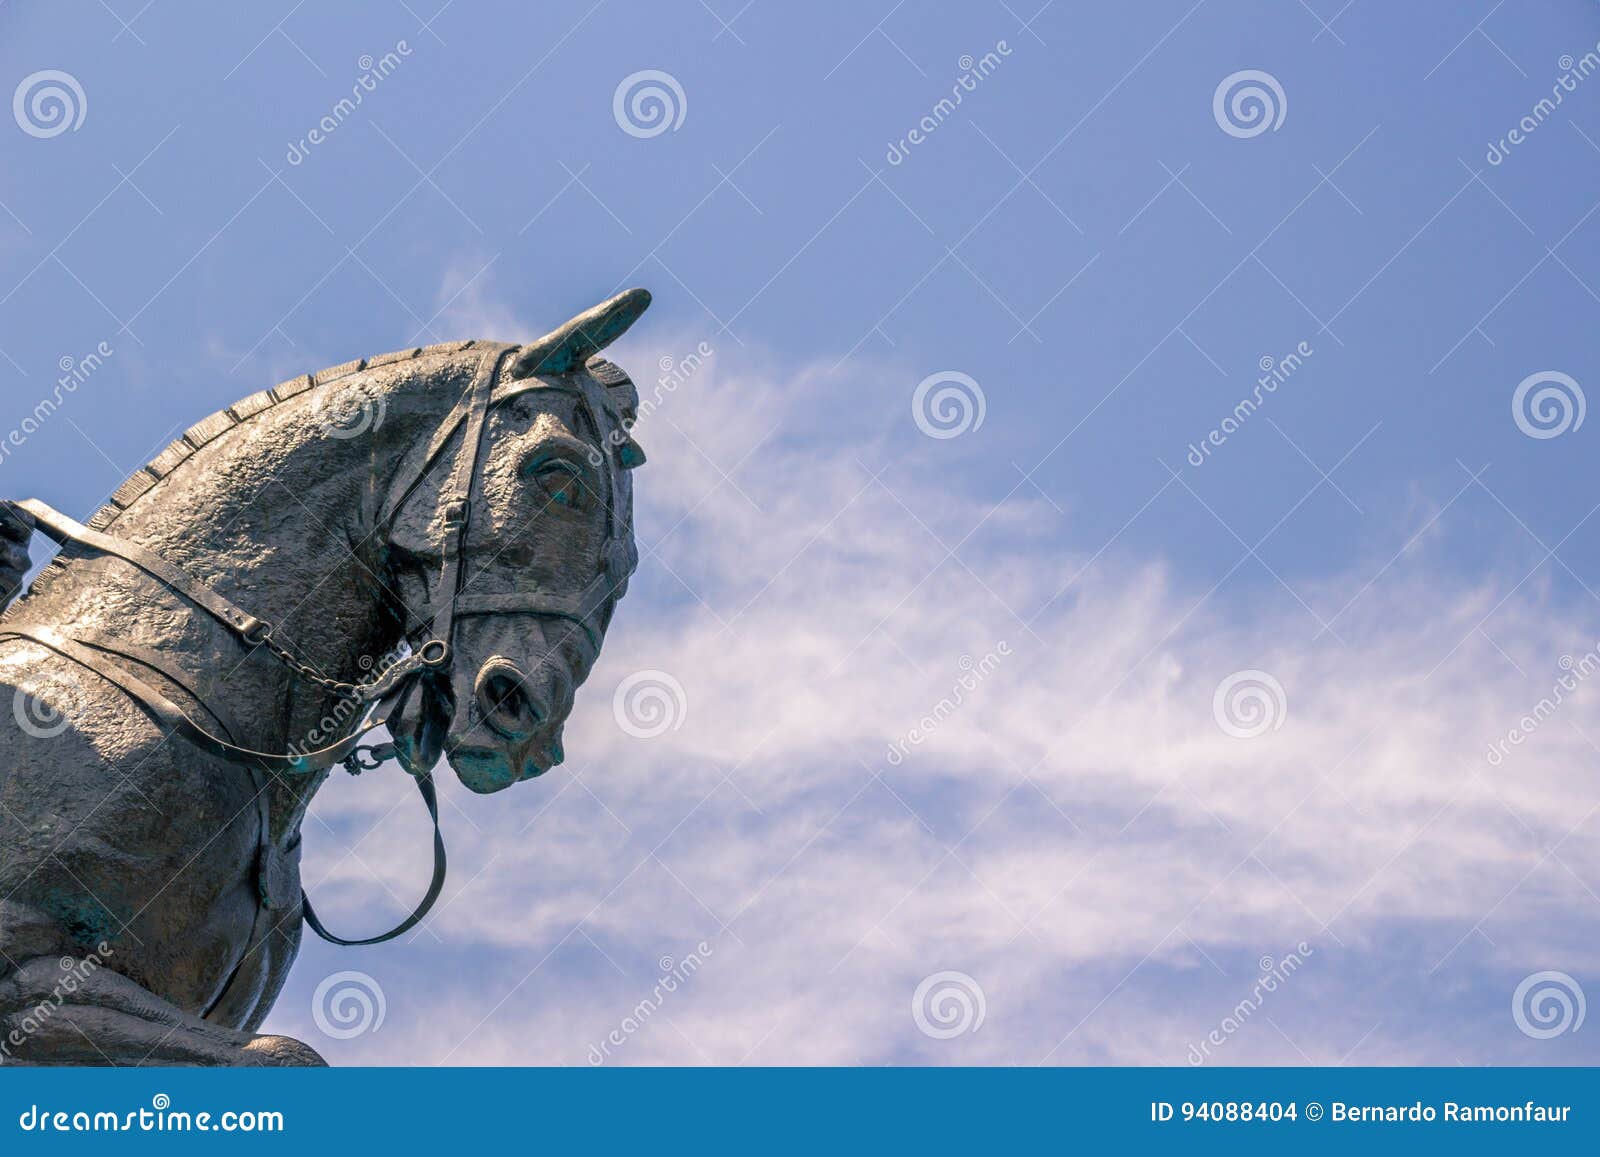 horse sculpture in macroplaza monterrey mexico